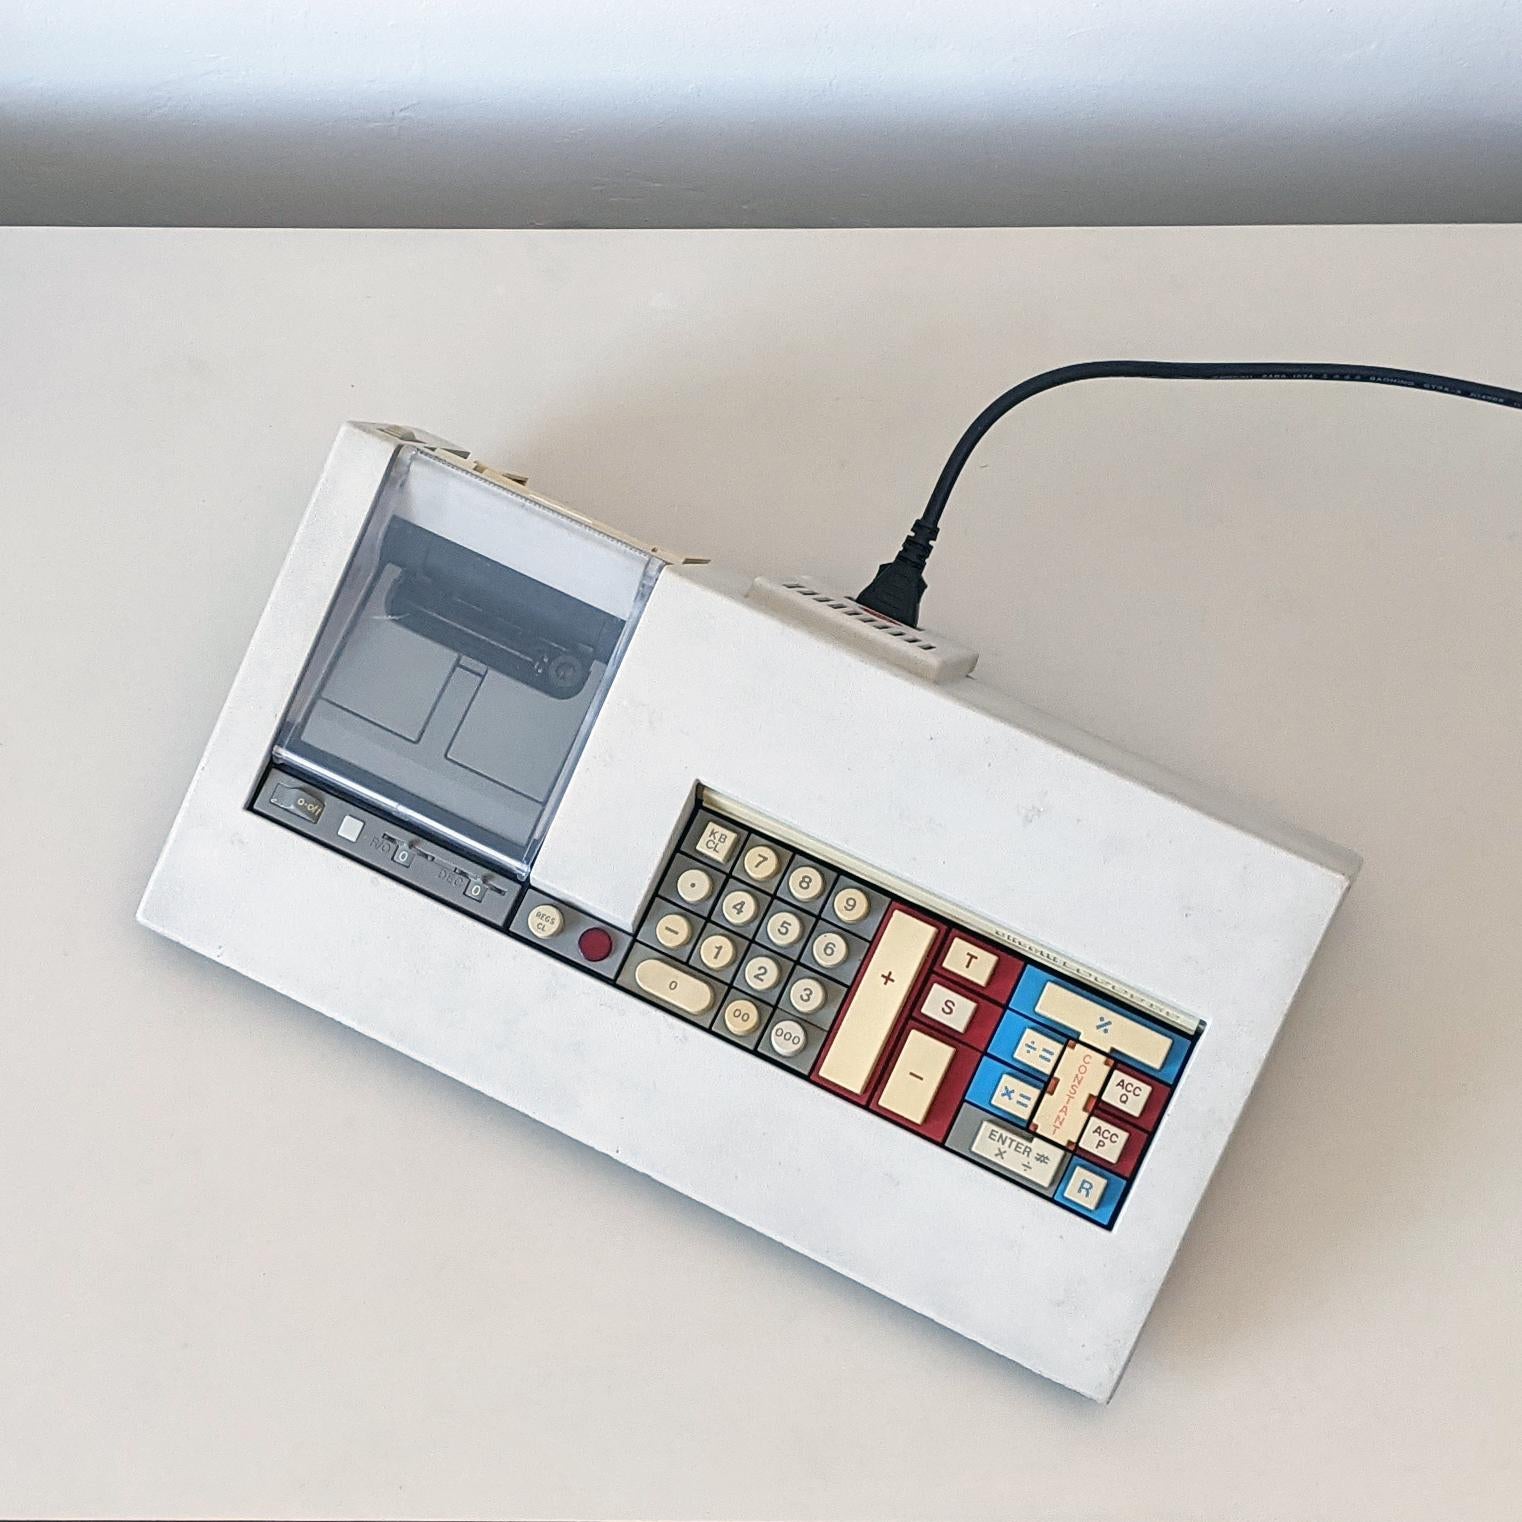 Mario Bellini, LOGOS 50/60 (59) Electronic Printing Calculator for Olivetti 1972 1